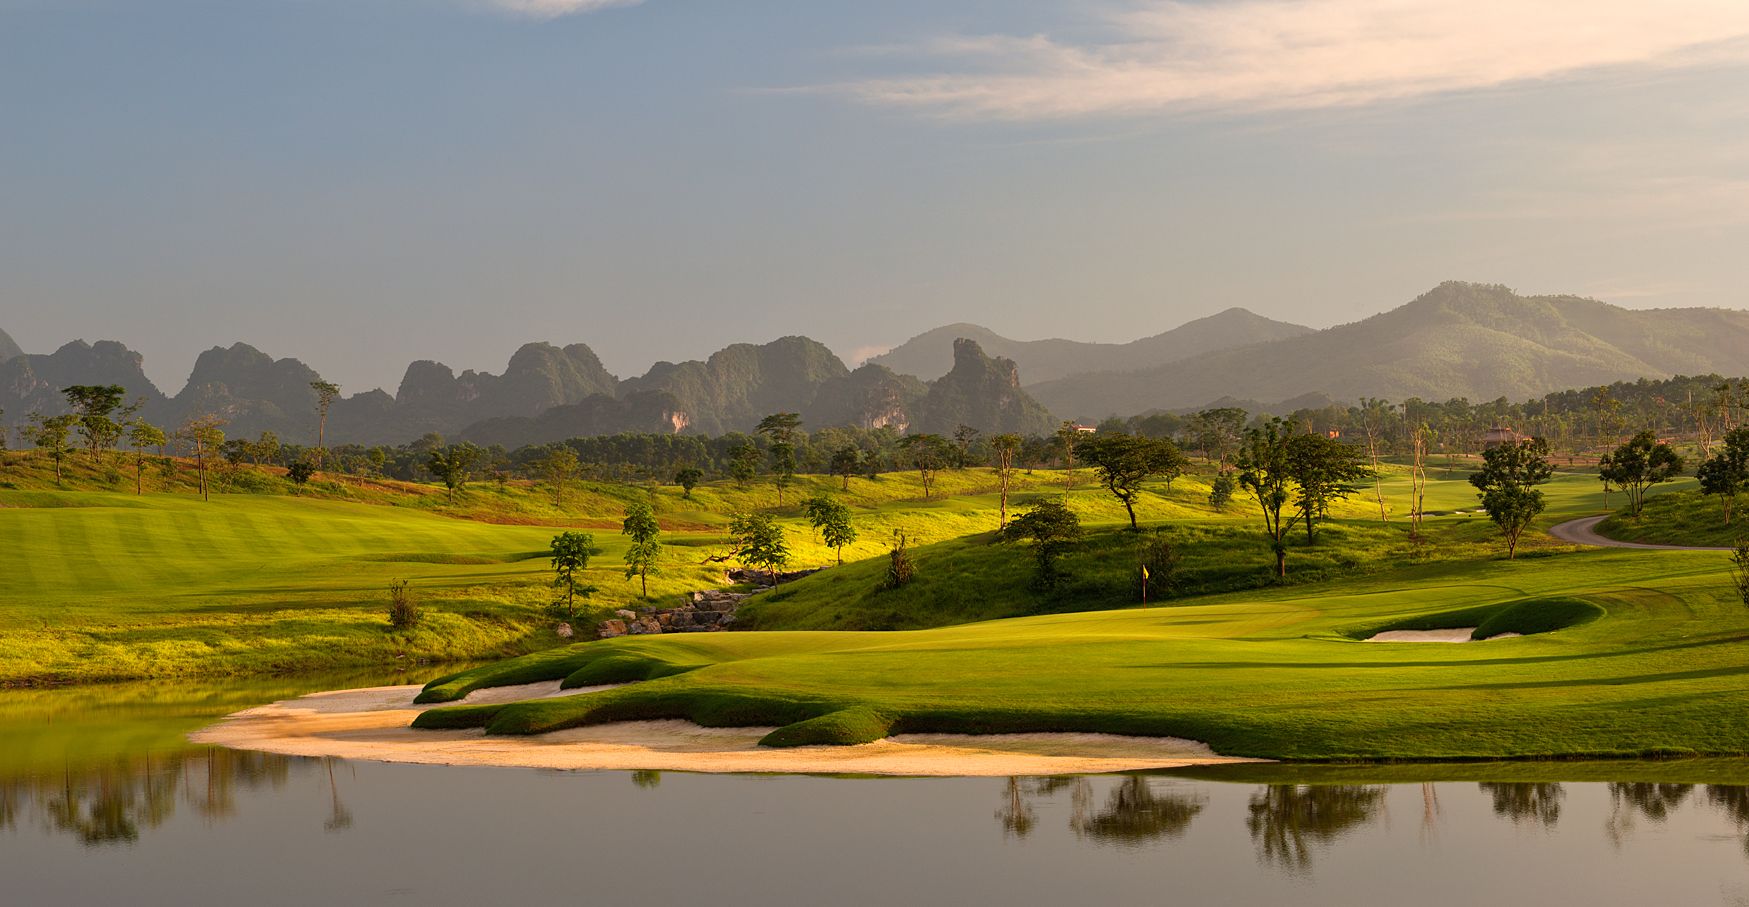 Sky Lake Resort & Golf Club, Hanoi